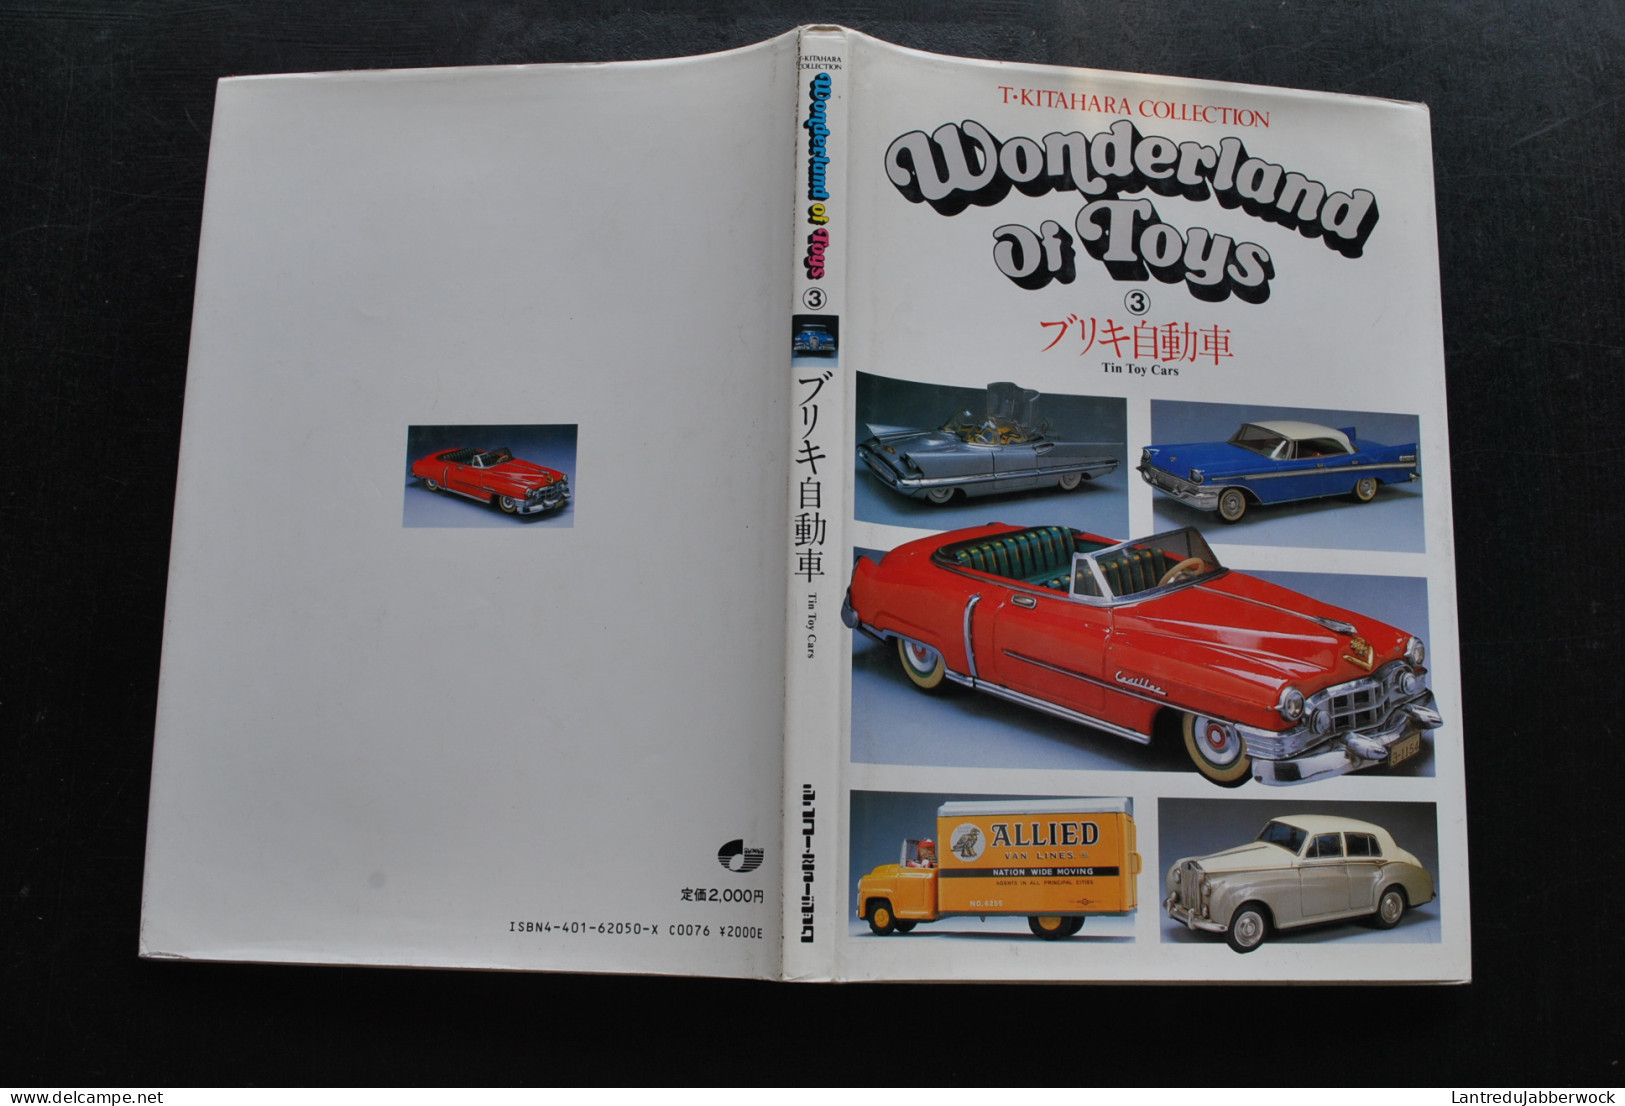 Wonderland Of Toys, Volume 3 : Tin Toy Cars, T. Kitahara Collection 1984 Marusan Bandai Asahi Yonezawa Masudaya Yoshiya - Catálogos